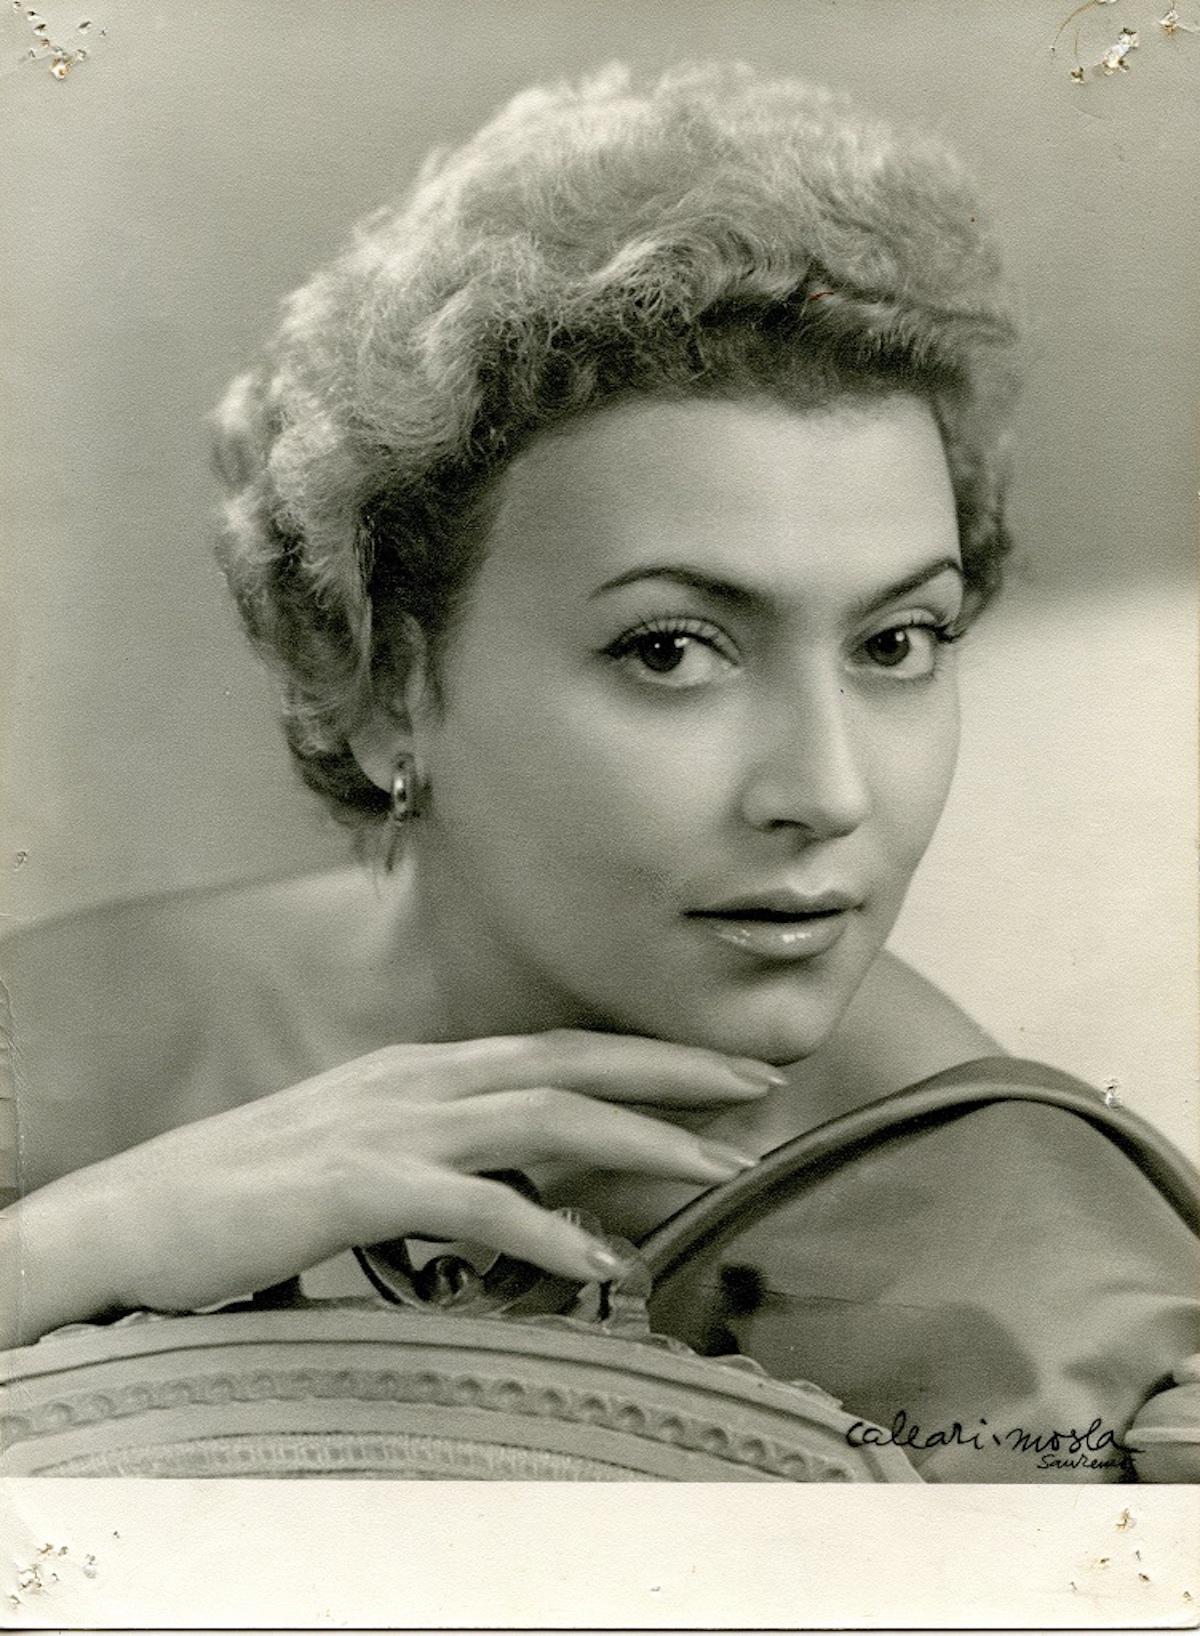 Unknown Portrait Photograph - Studio Portrait of Nilla Pizzi - B/w Photo - 1950s